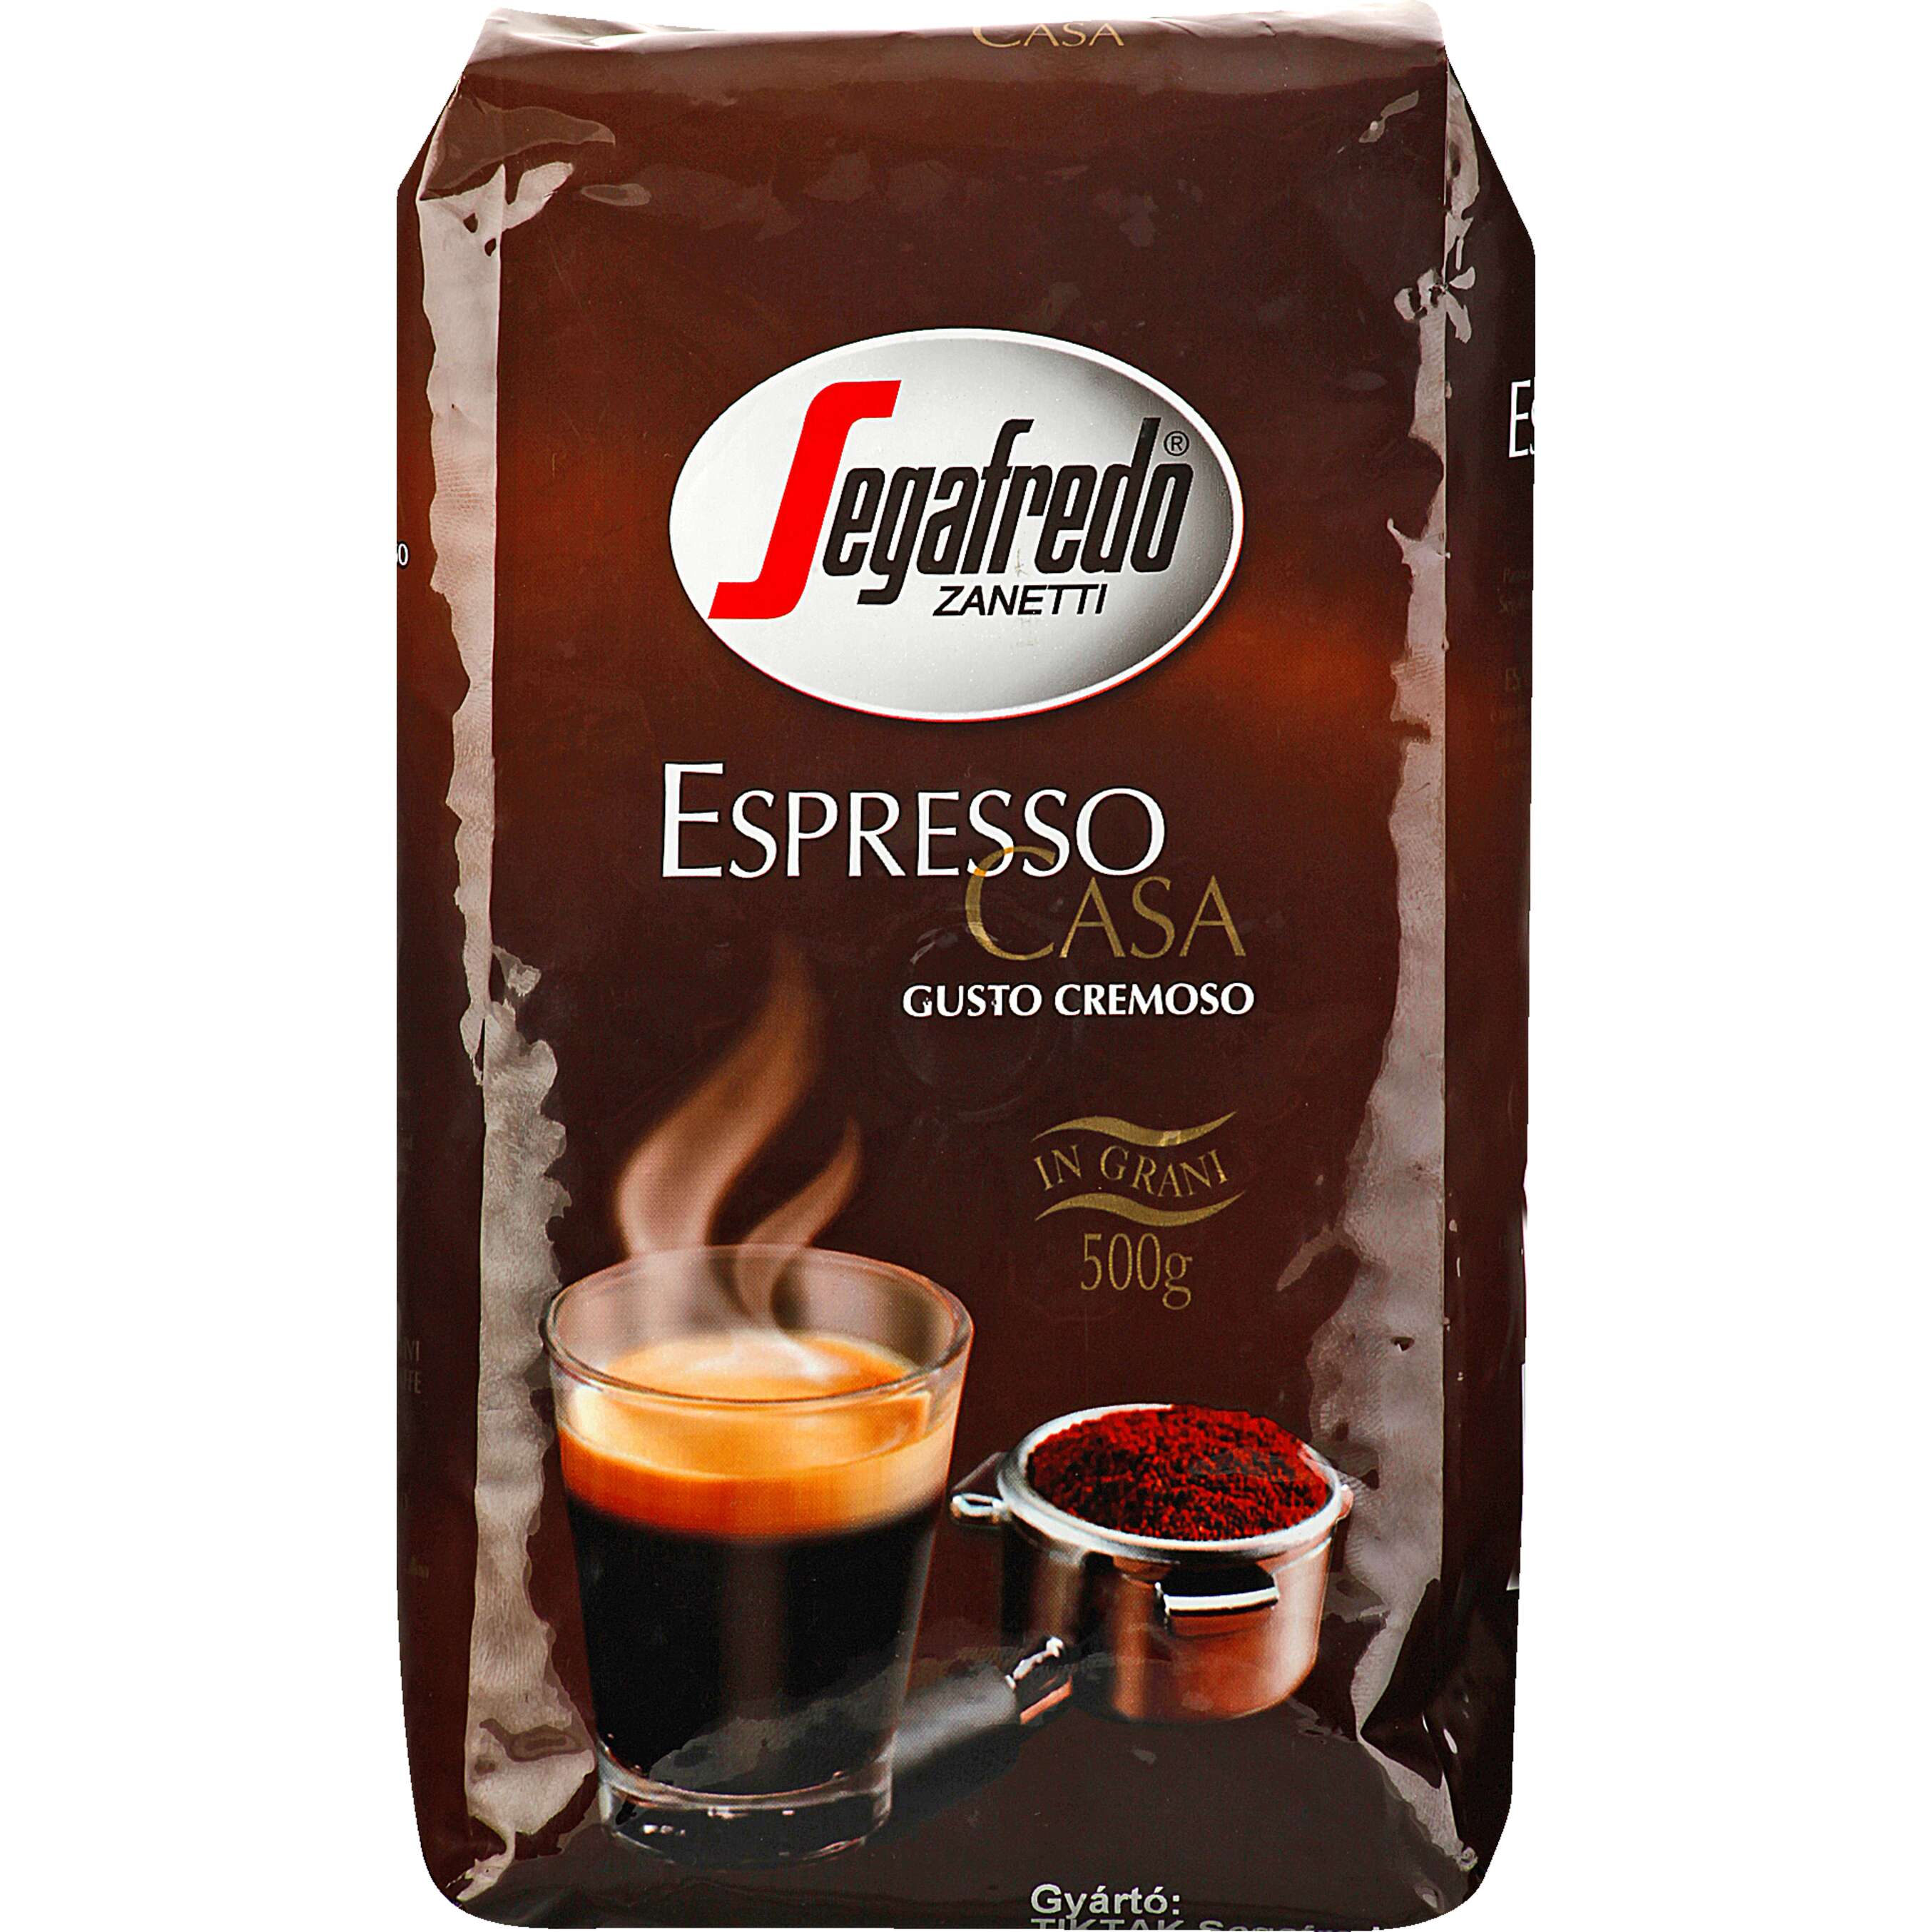 Fotografija ponude Segafredo Kava espresso Casa zrno